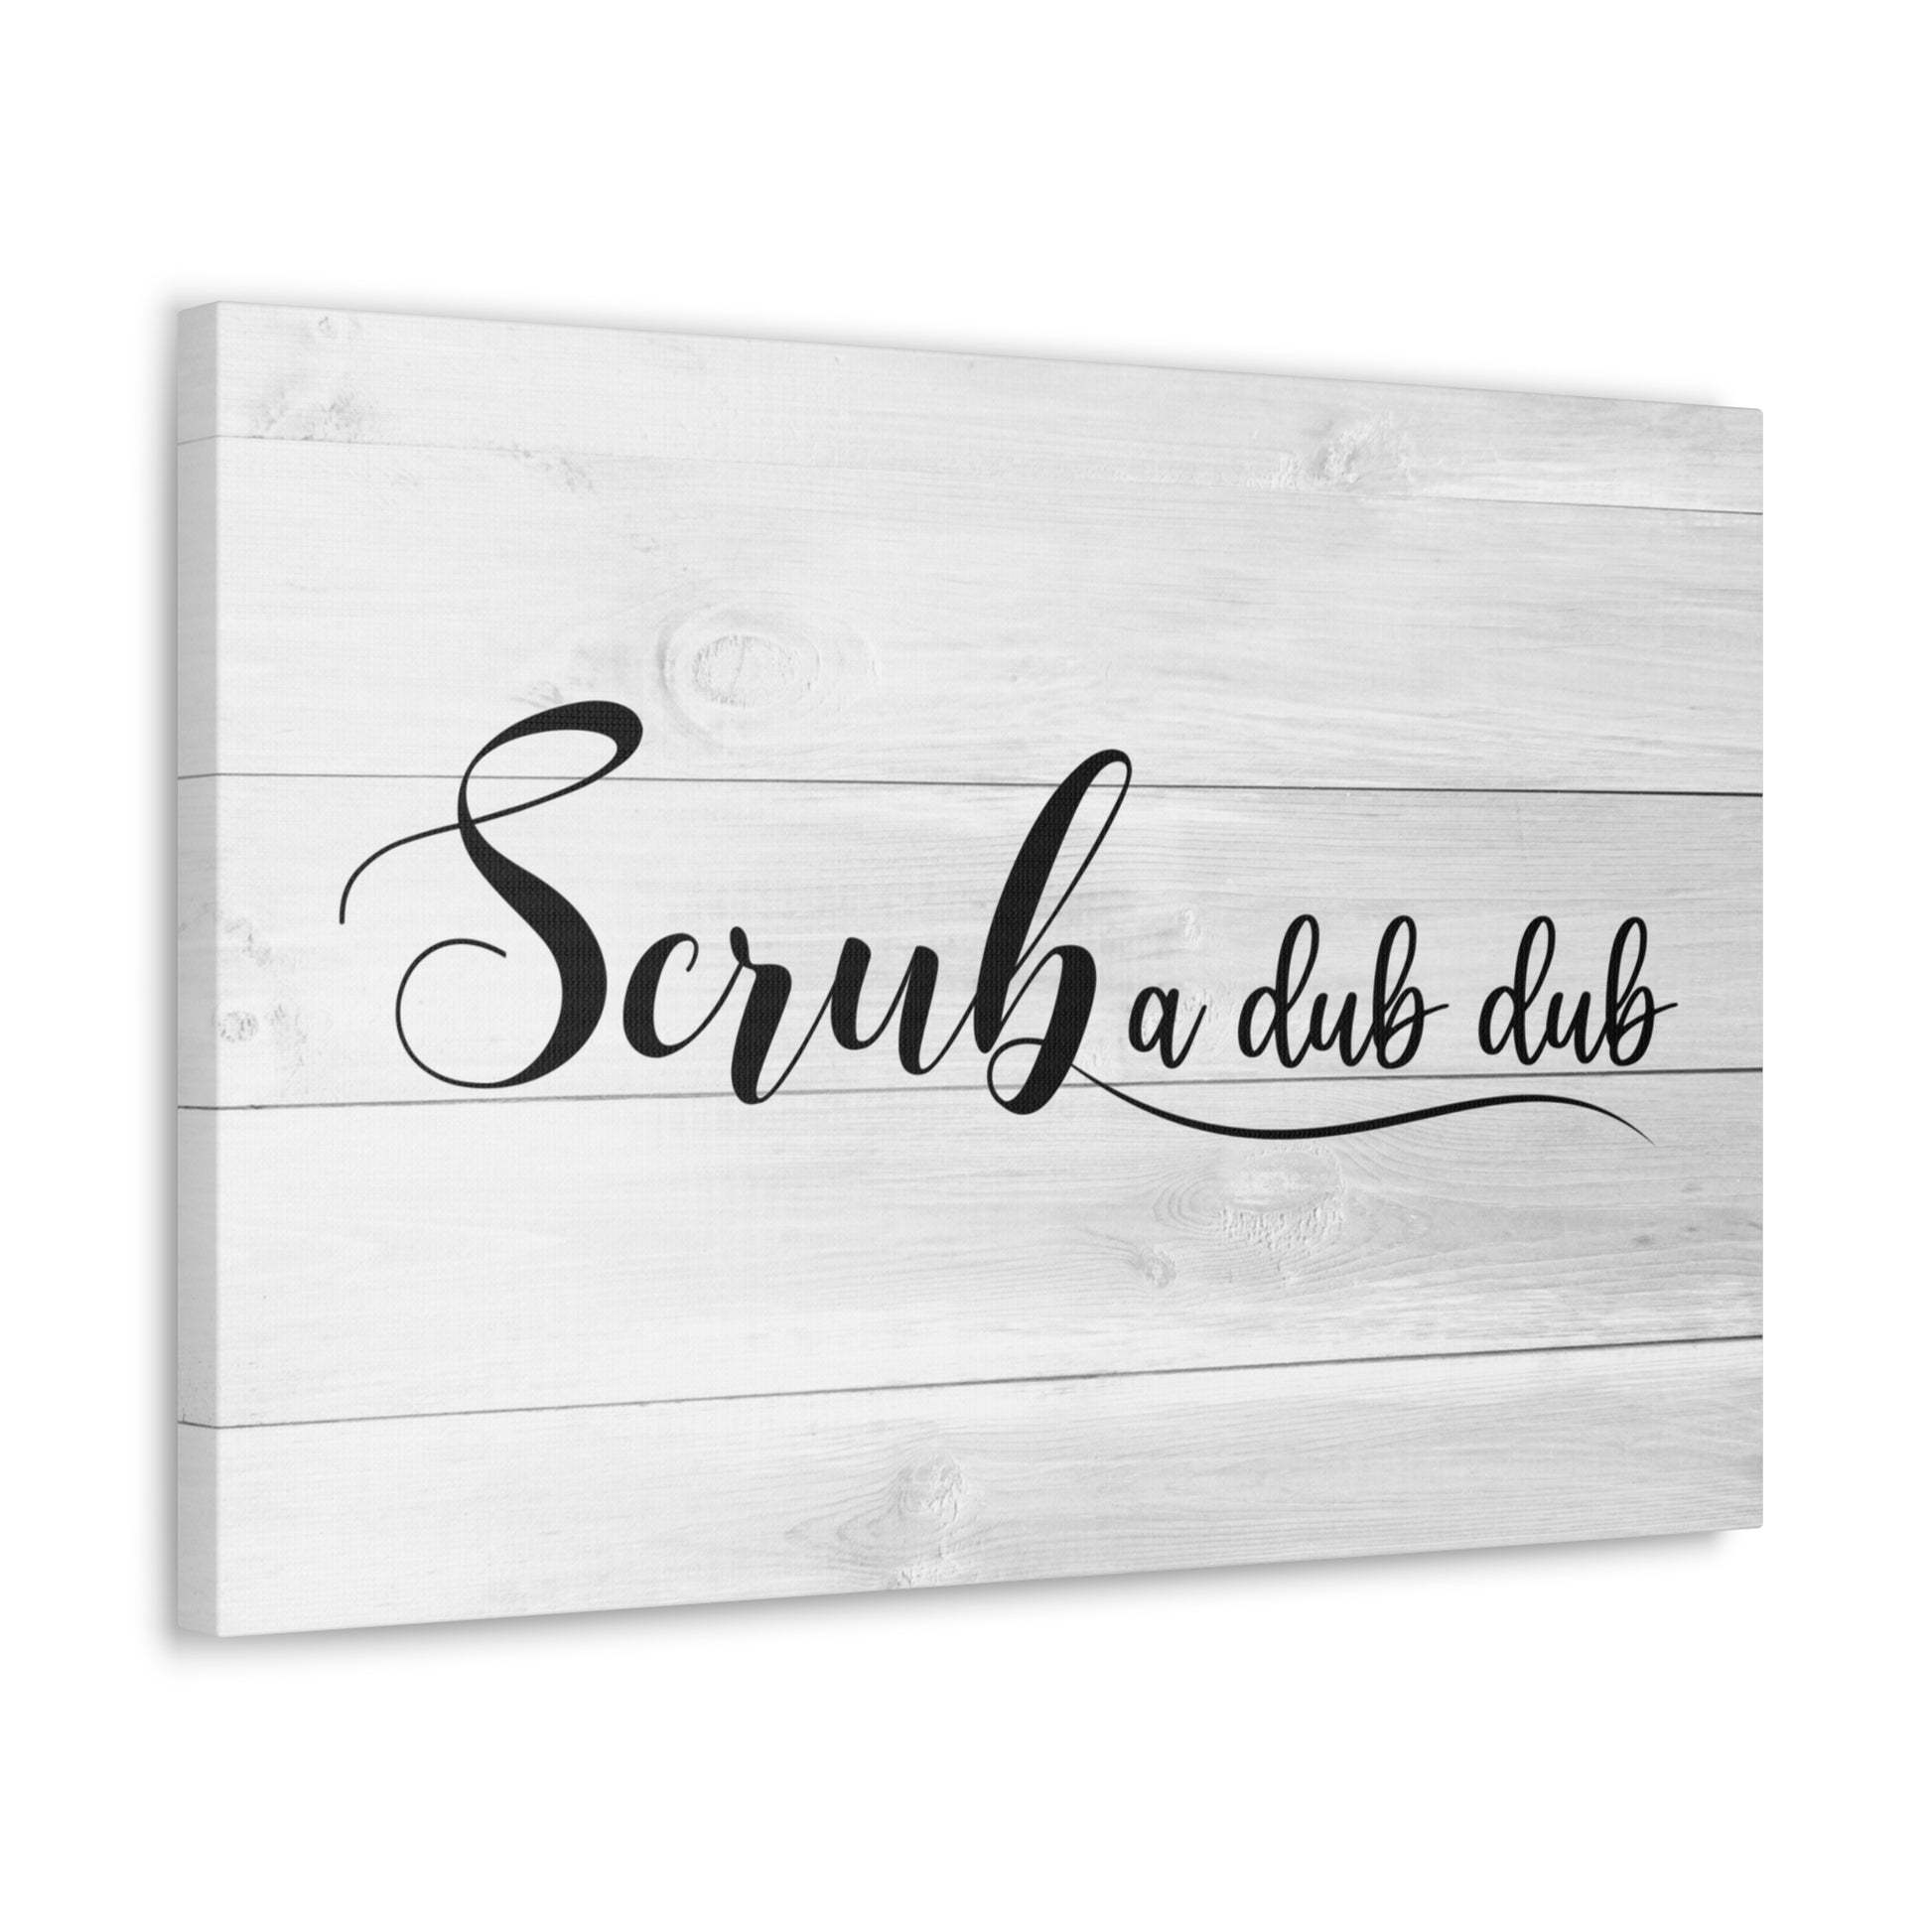 "Scrub A Dub Dub" Bathroom Wall Art - Weave Got Gifts - Unique Gifts You Won’t Find Anywhere Else!